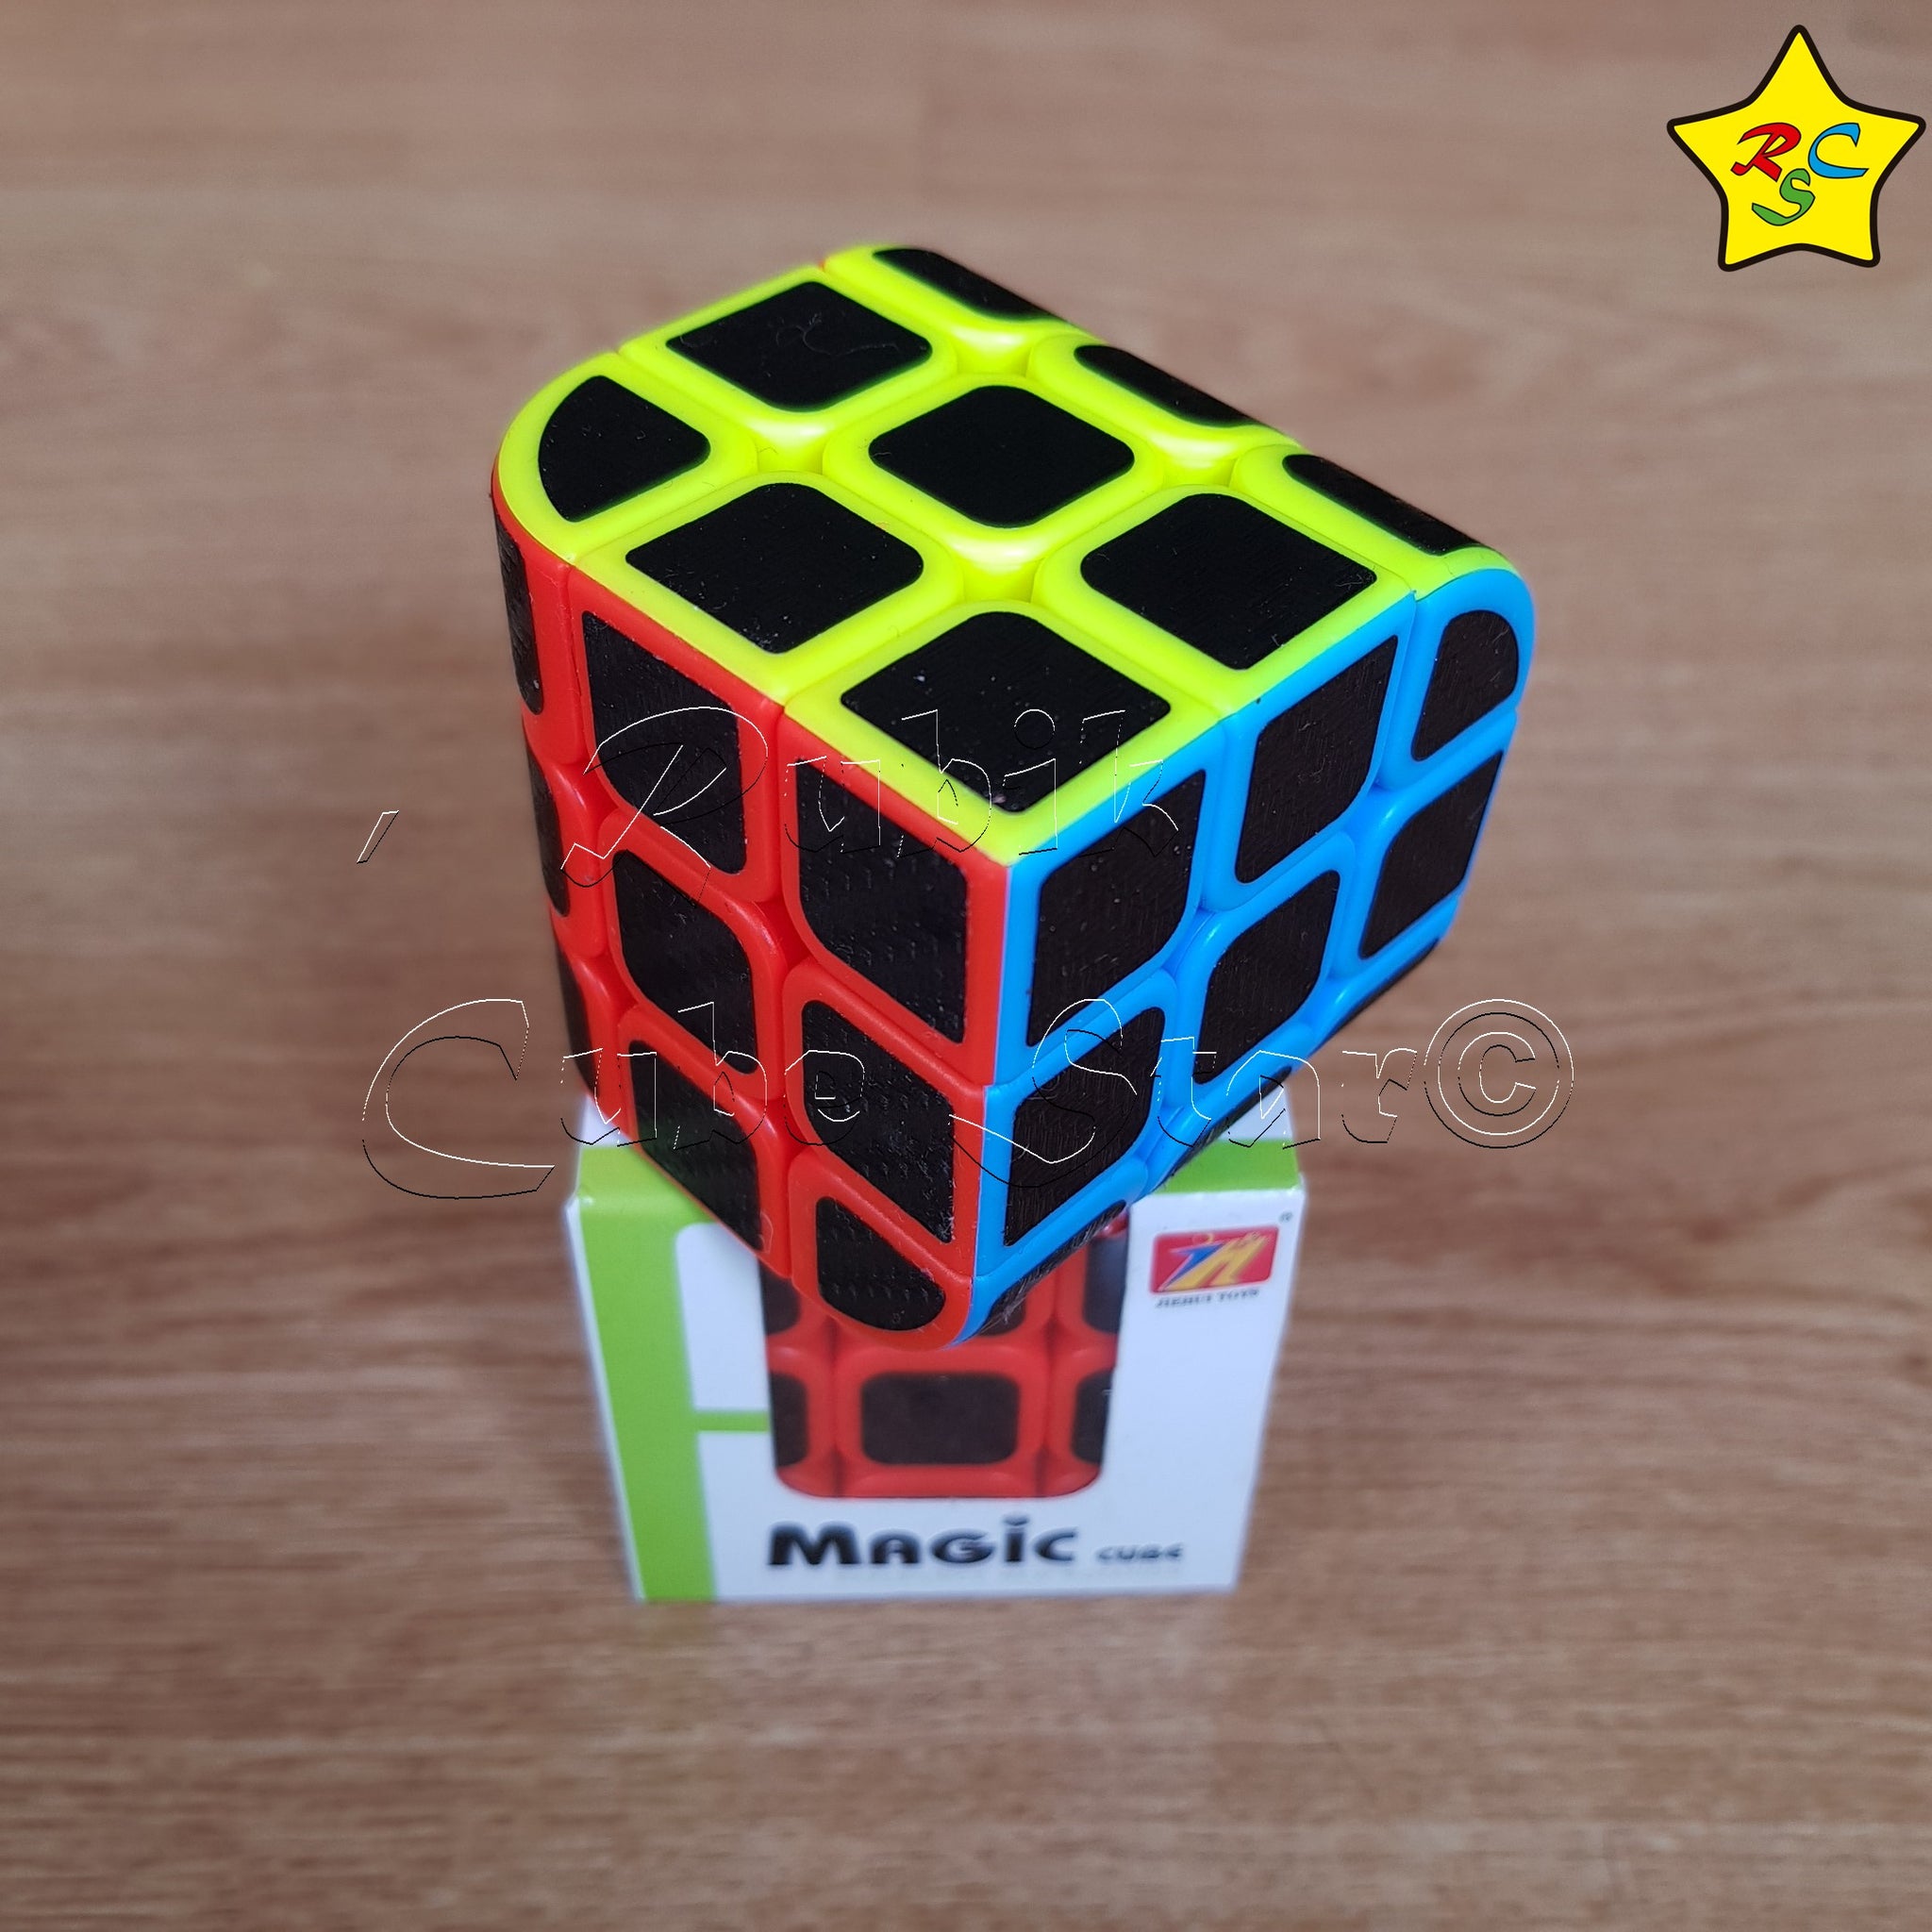 Cubo Rubik 3 Colores Penrose 3x3 Cubo Rubik Fibra Carbono 3 Colores Magic Cube – Rubik Cube Star